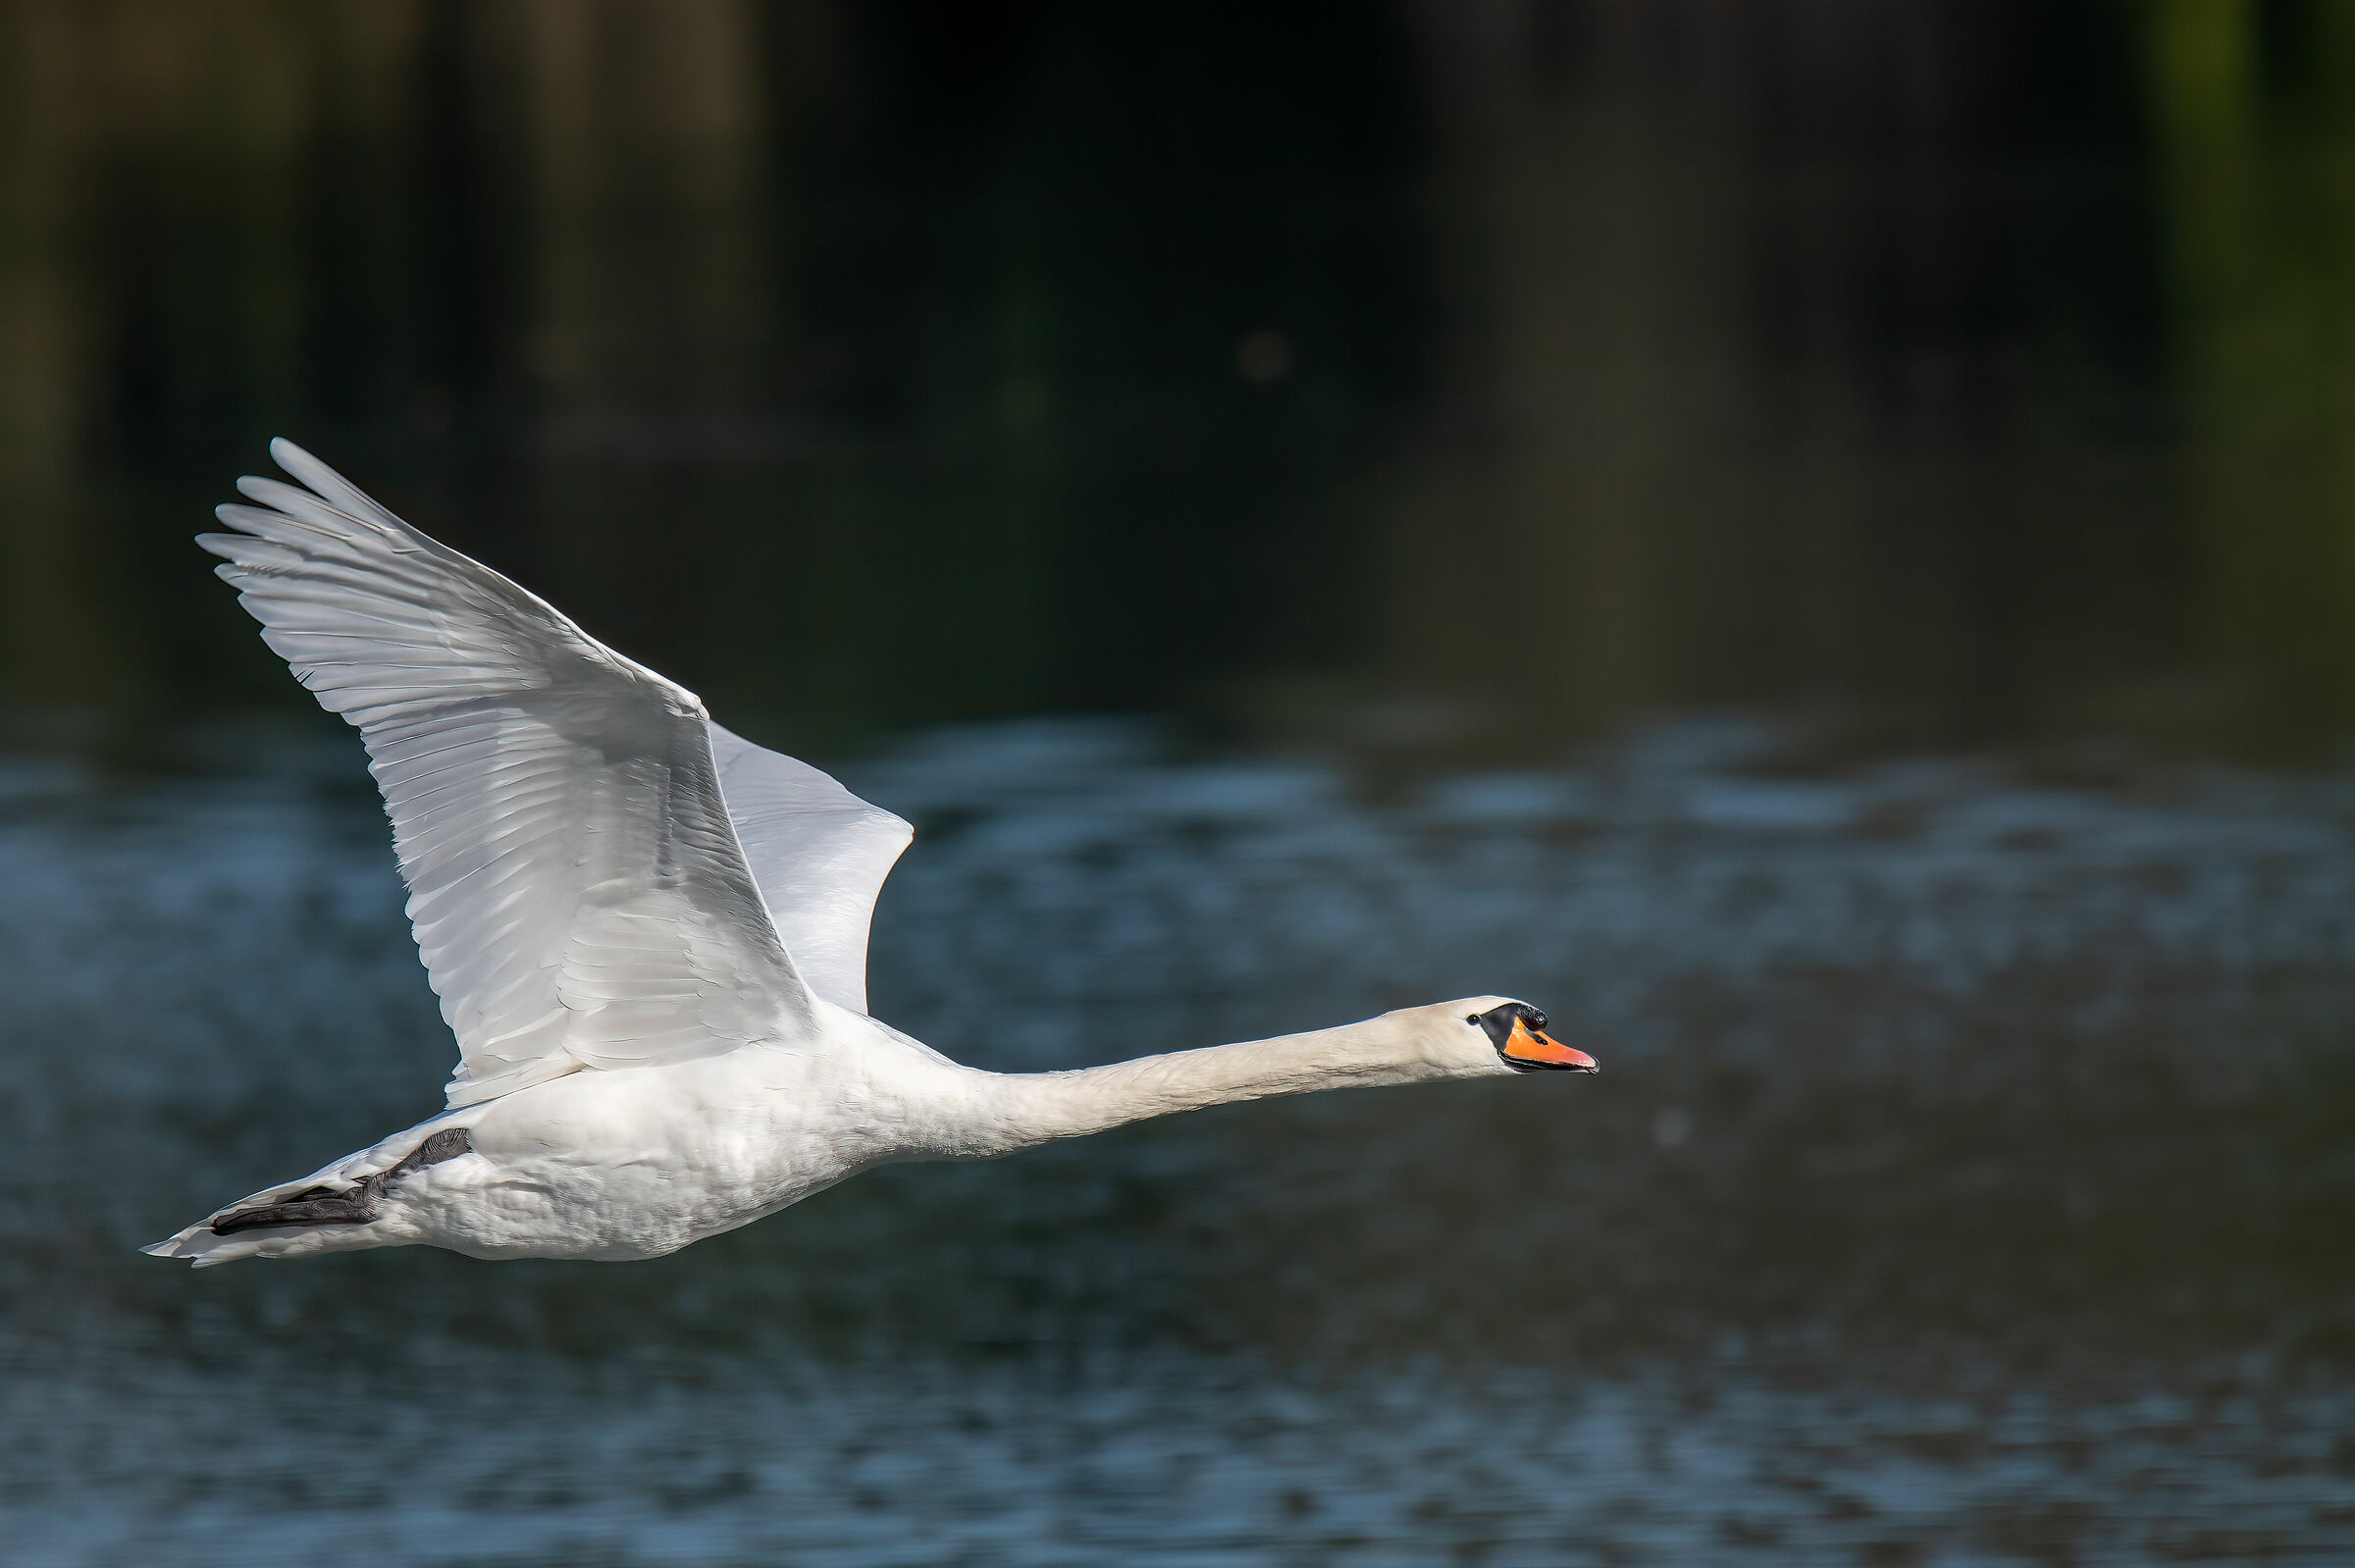 Royal Swan in flight...